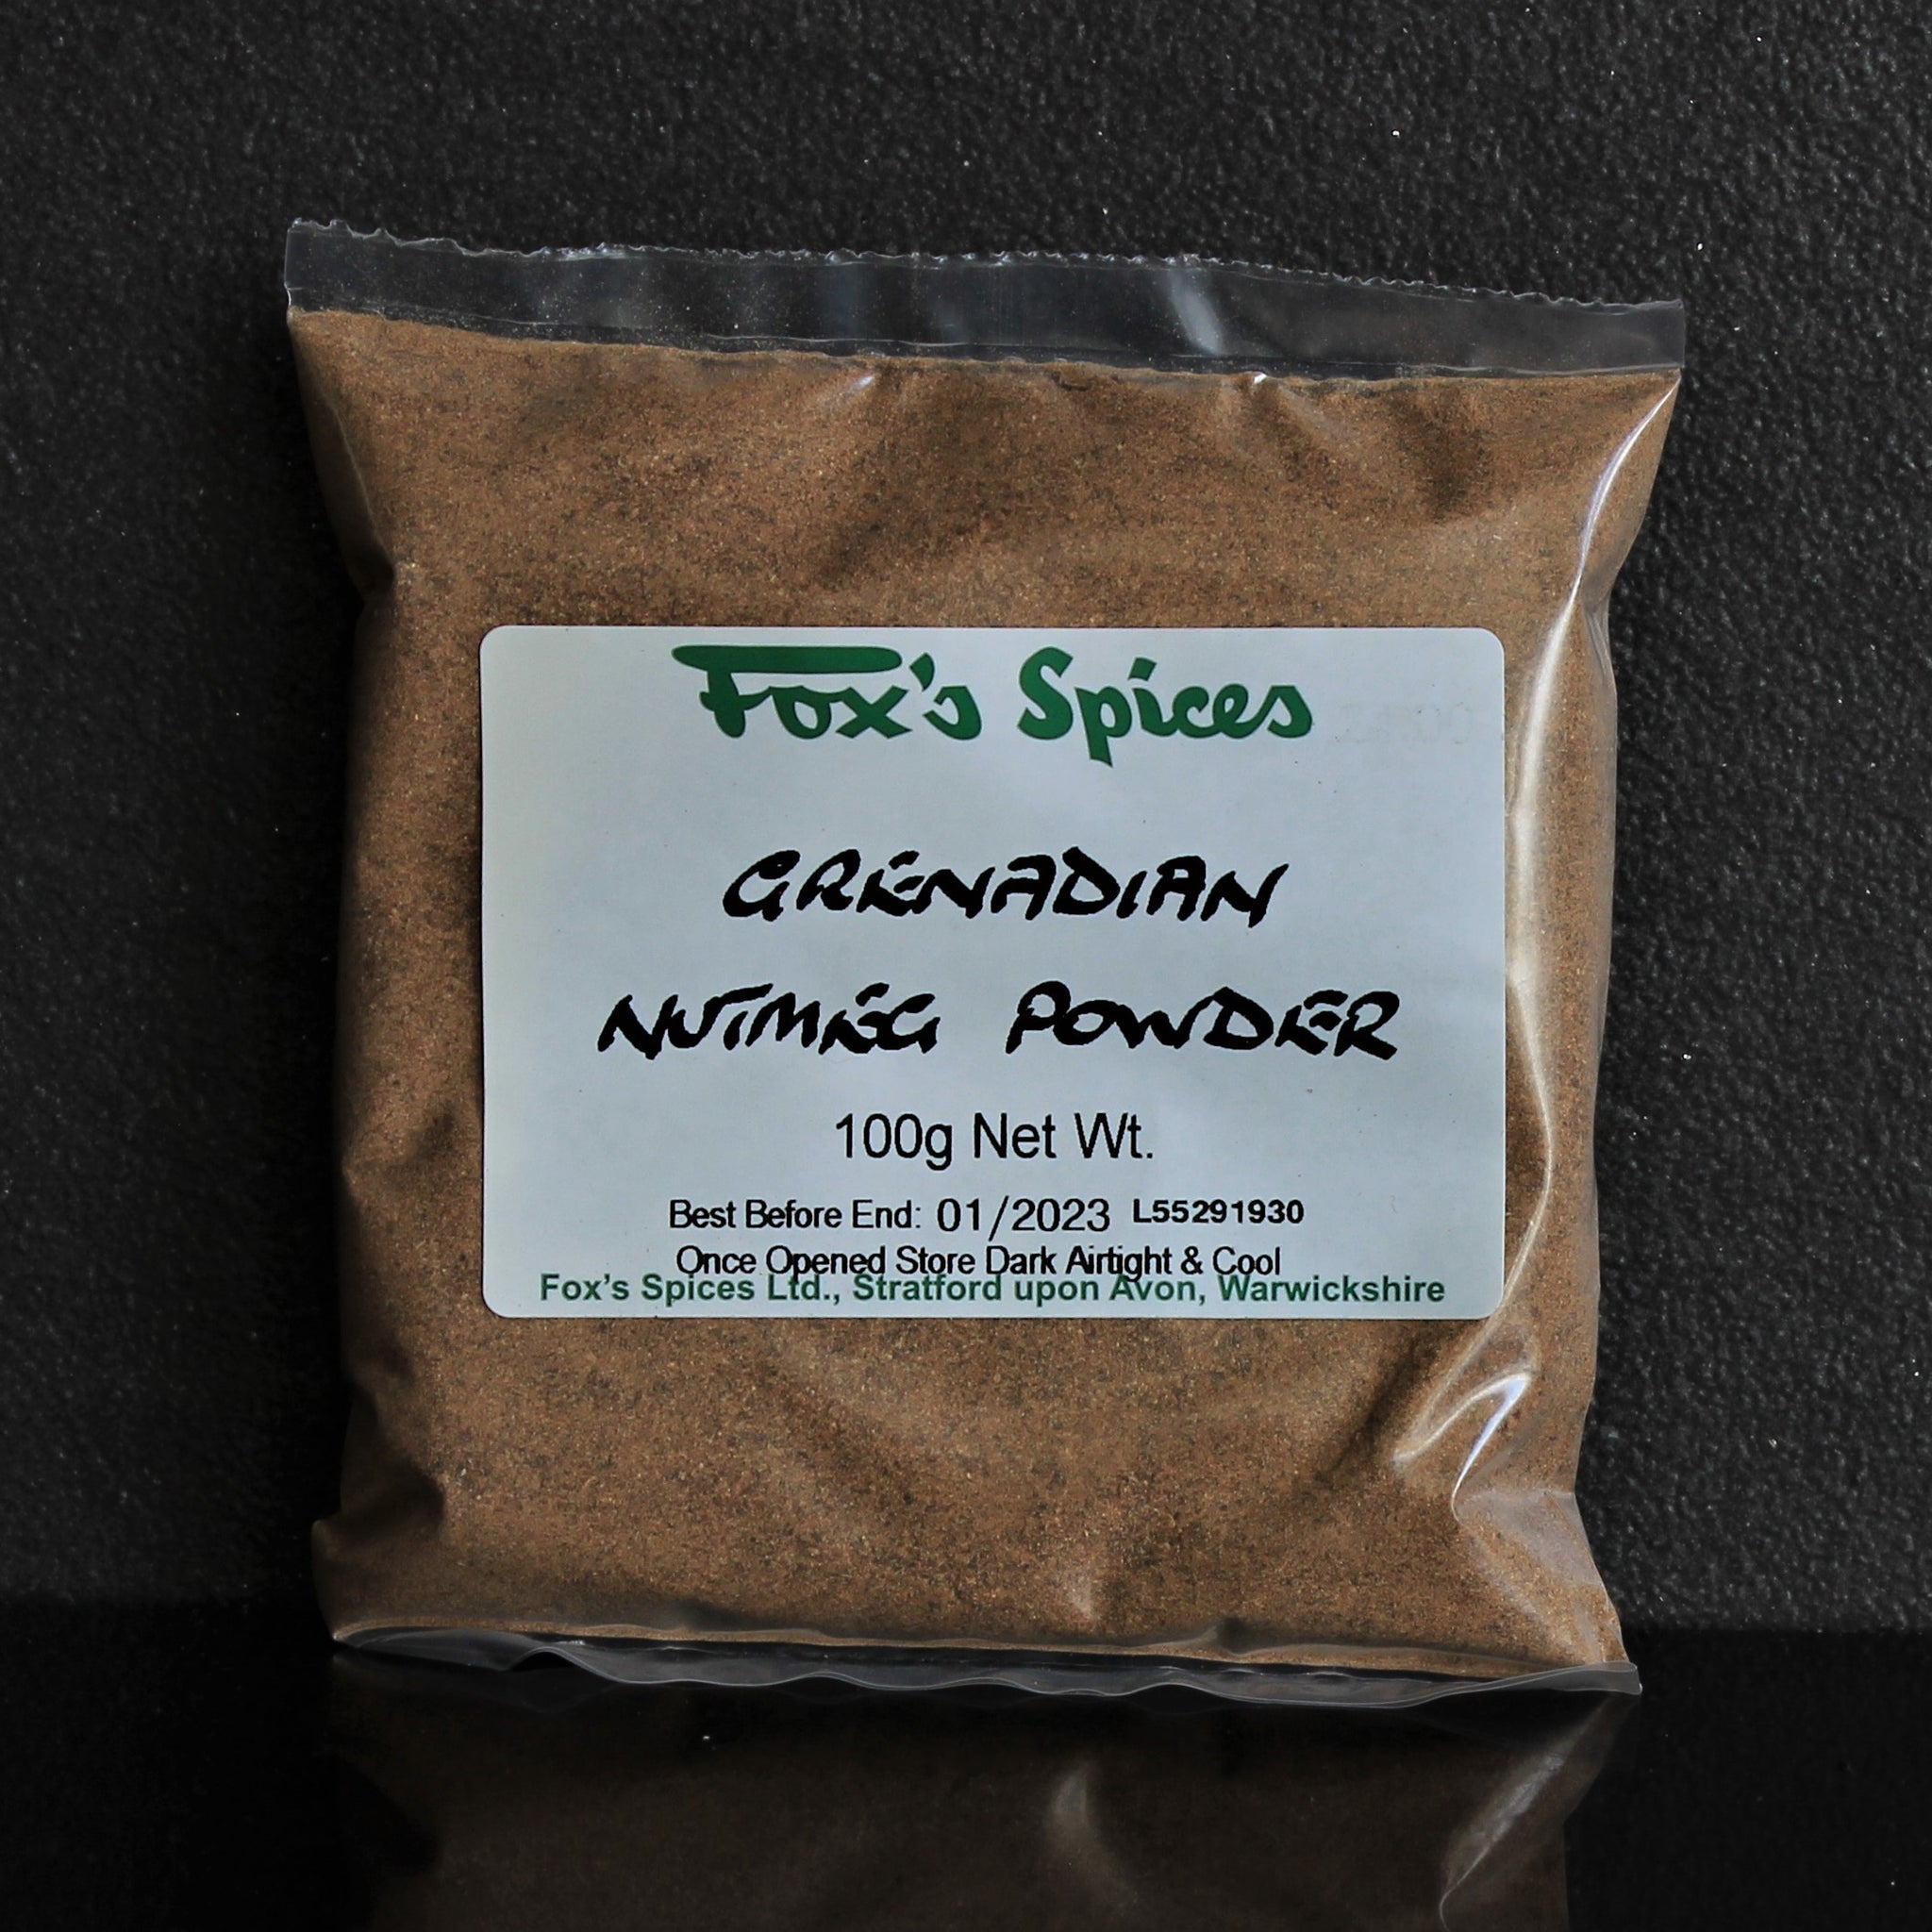 A 100g bag of Fox's Spices Grenadian nutmeg powder